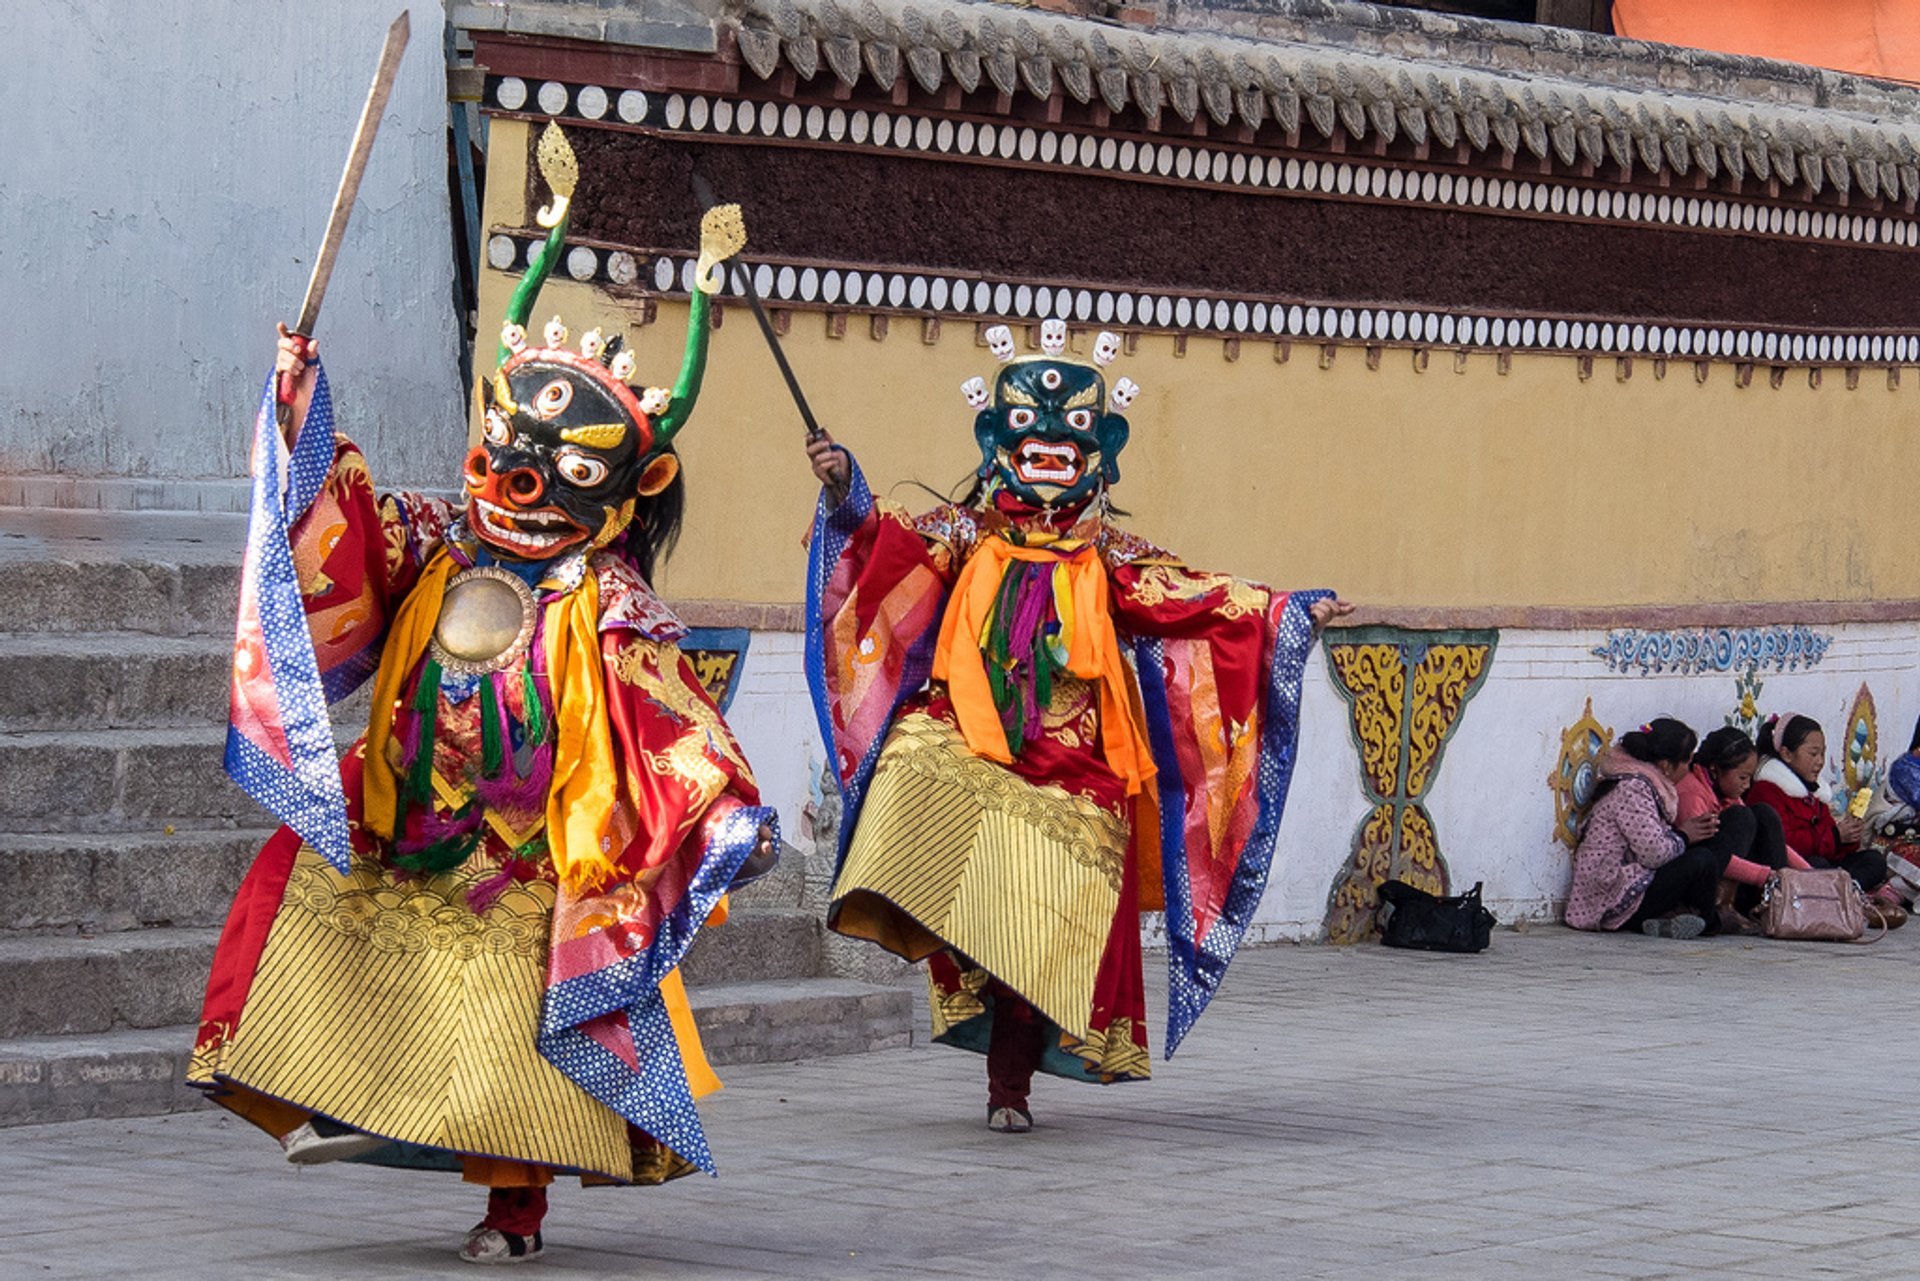 Losar Festival or Tibetian New Year